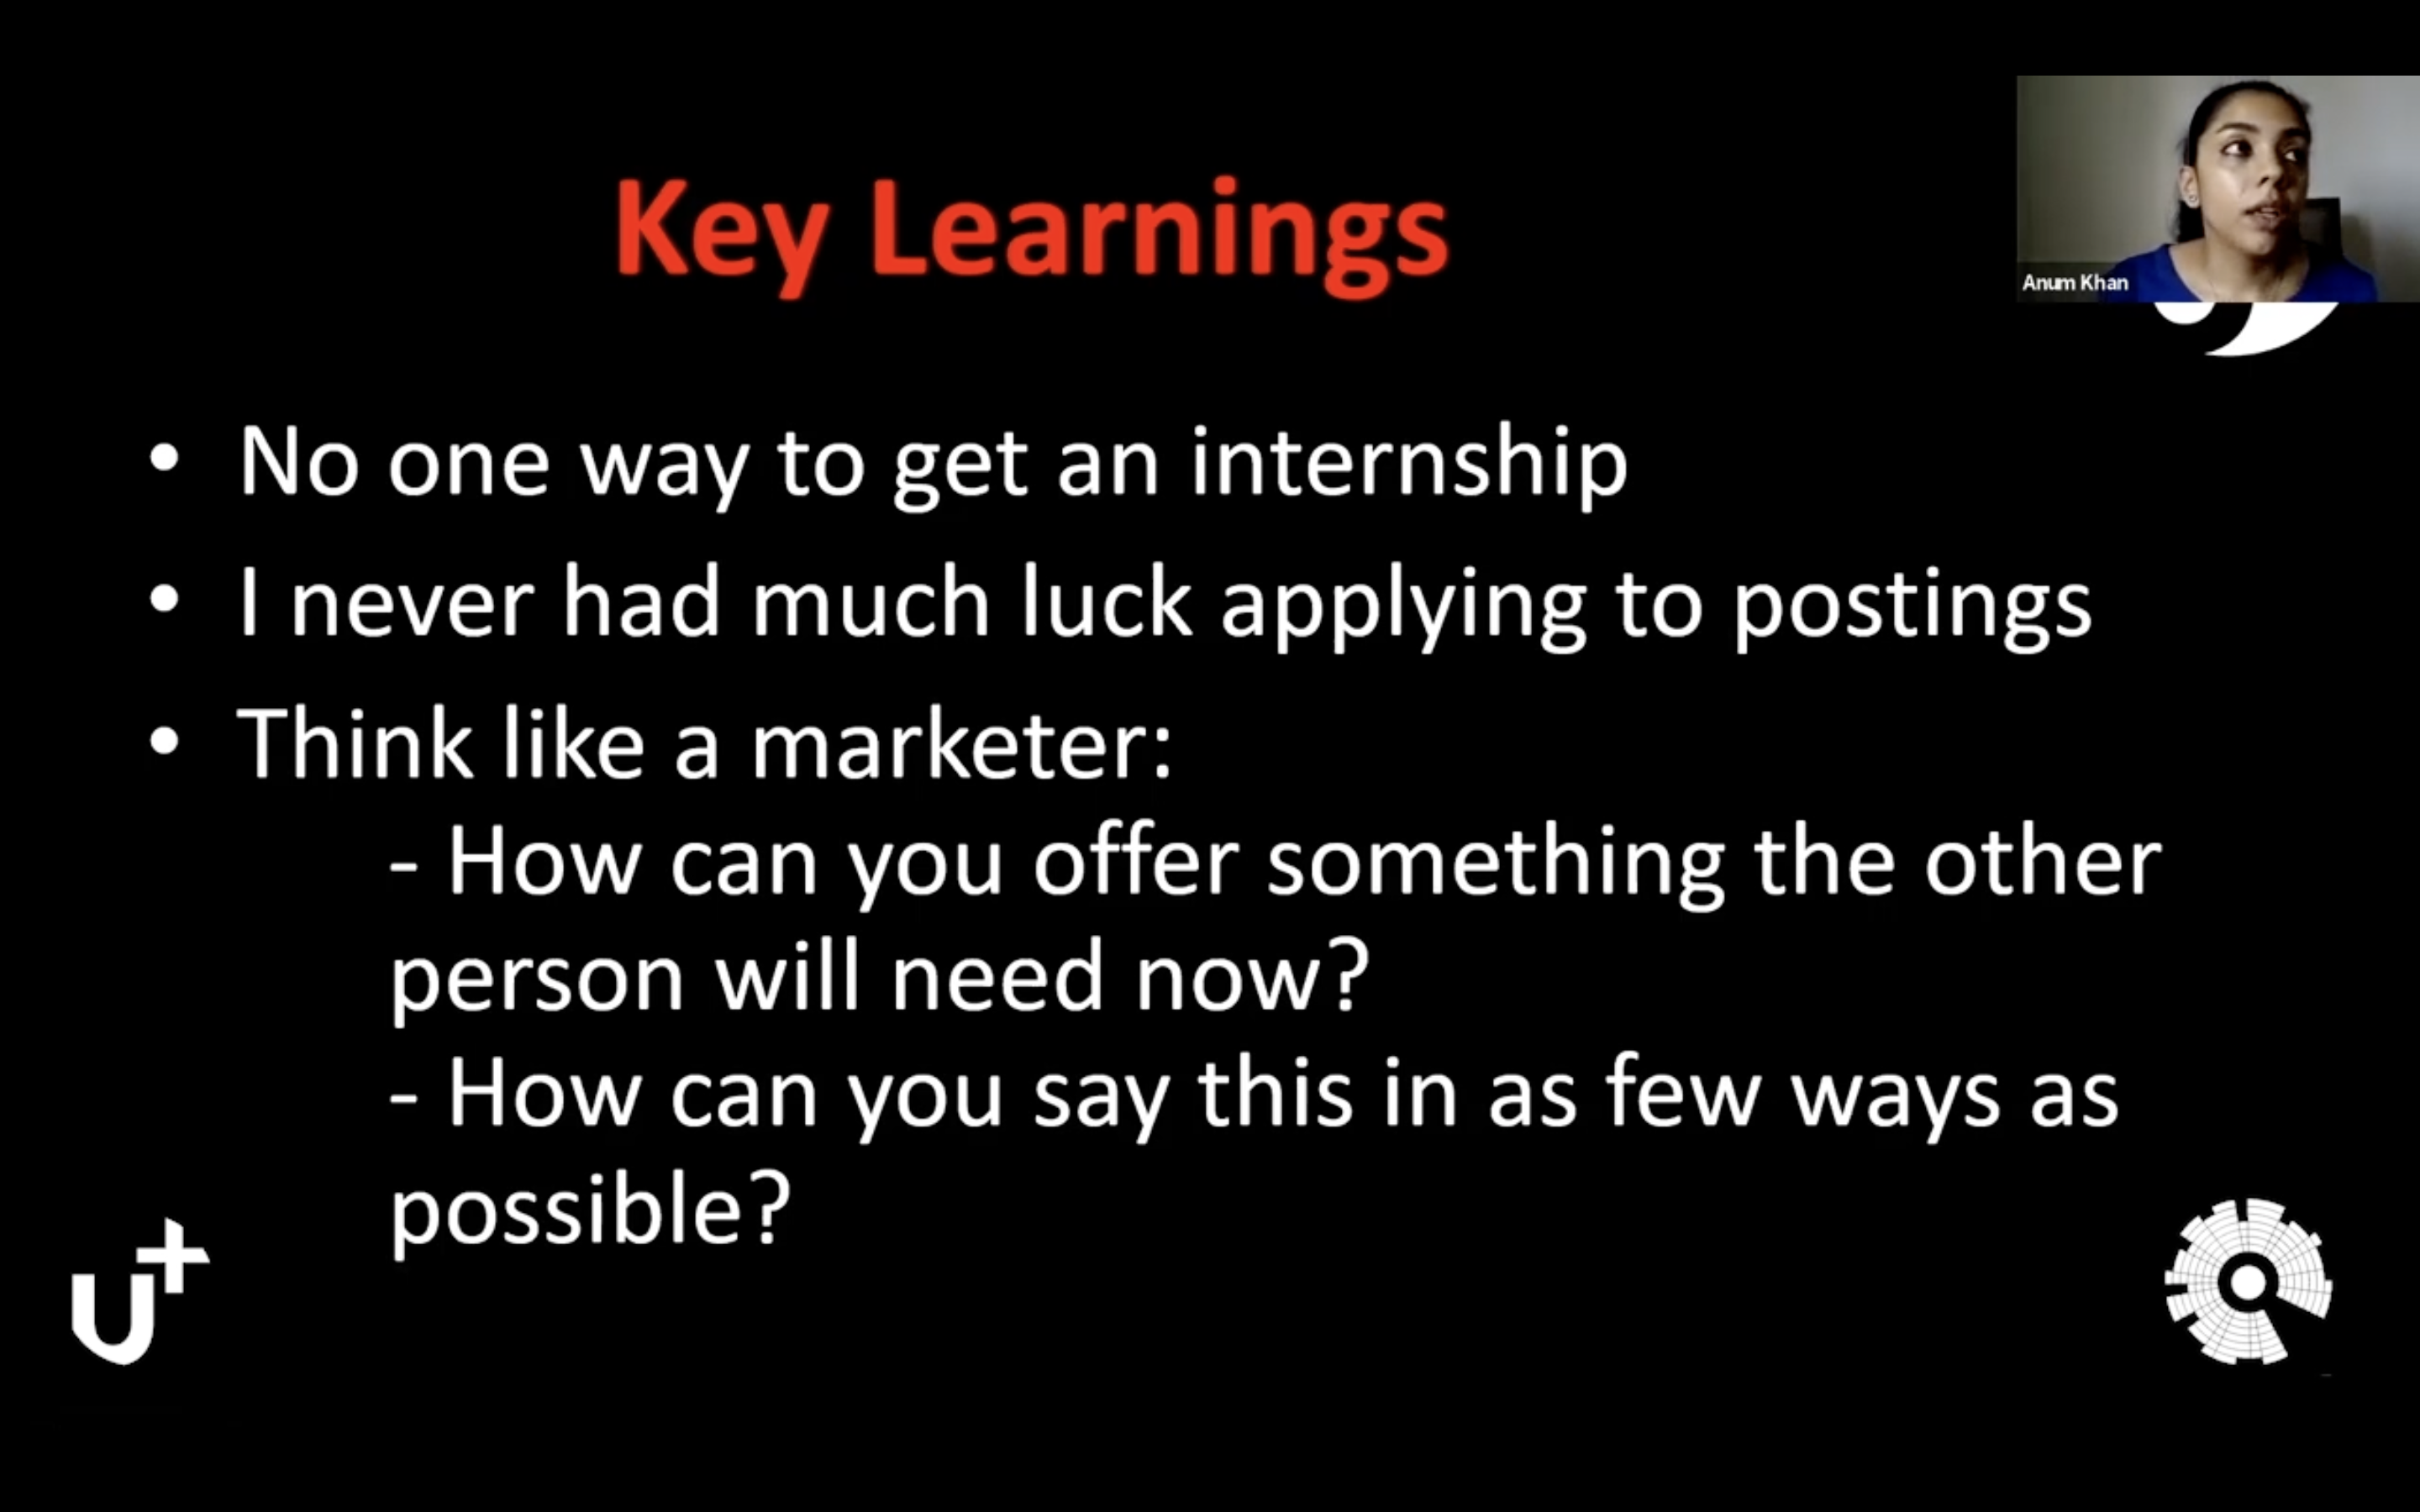 Anum Khan on Key Learnings for Getting Entertainment Jobs & Internships